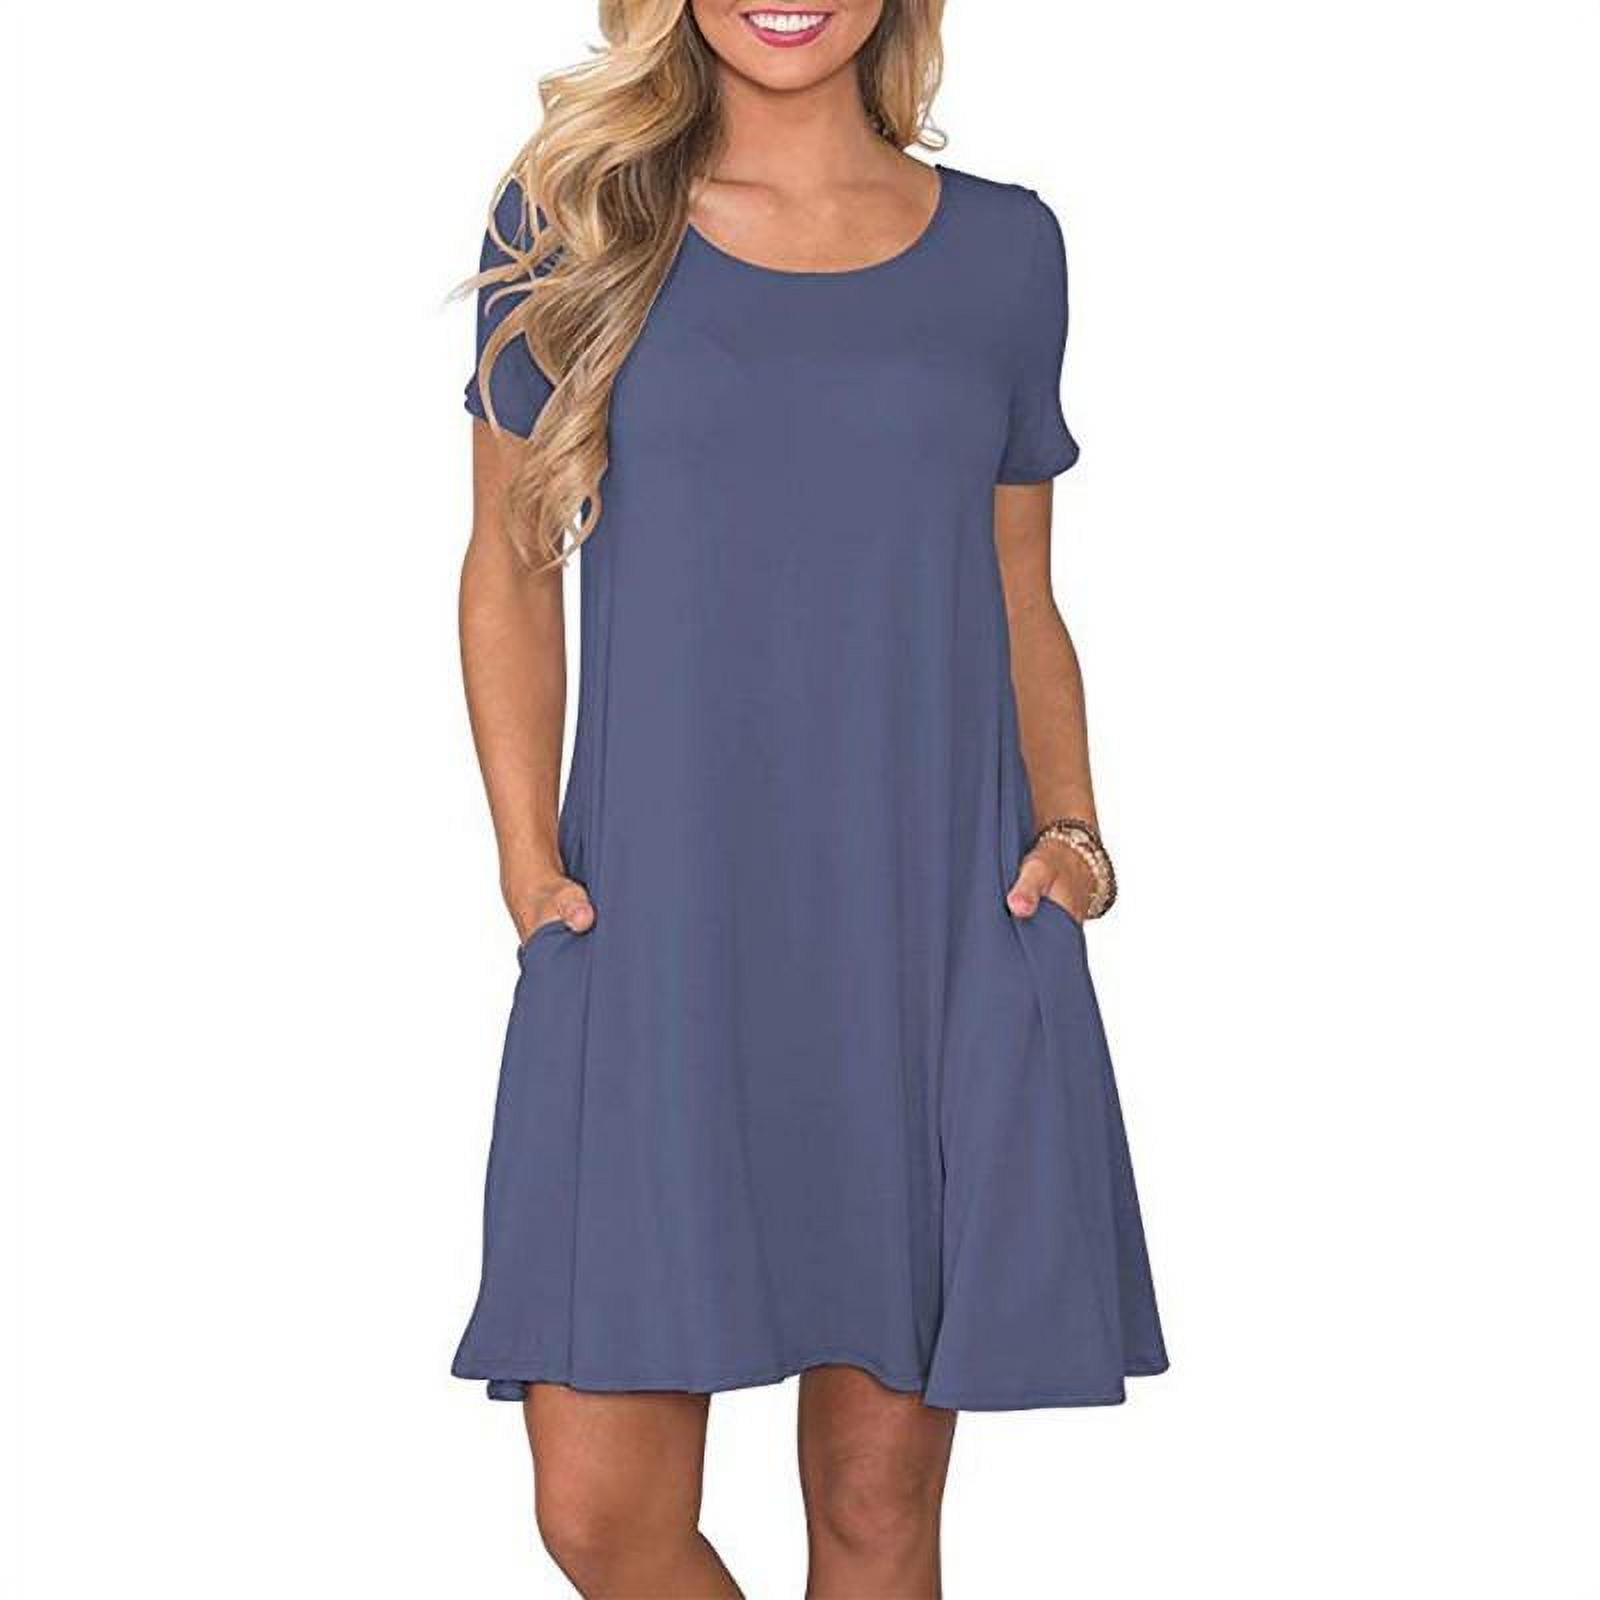 Women's Casual Plain Simple T-Shirt Dress Scoop Neck Short Sleeve Tunic Dresses Summer Fit Comfy Basic Dress 